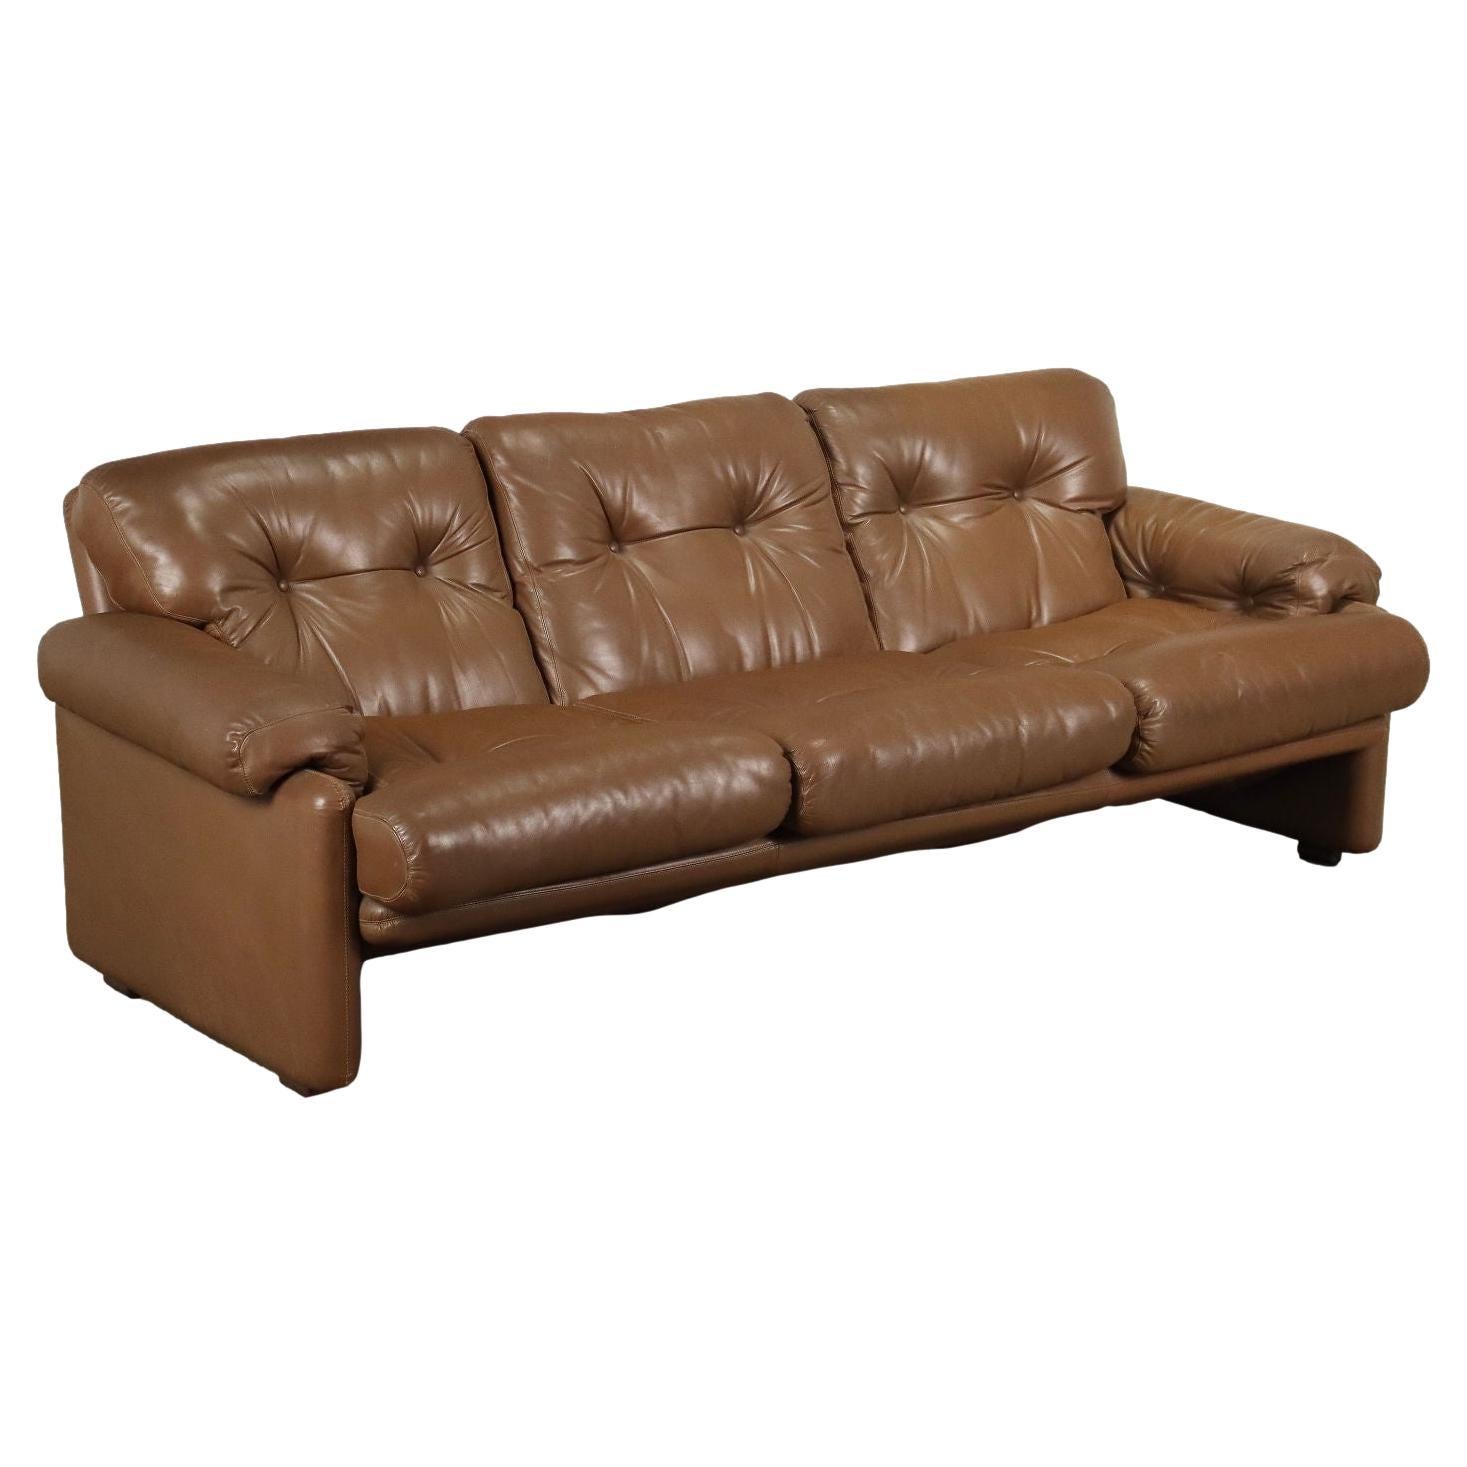 'Coronado' Sofa T. Scarpa for B&B Leather, Italy, 1970s